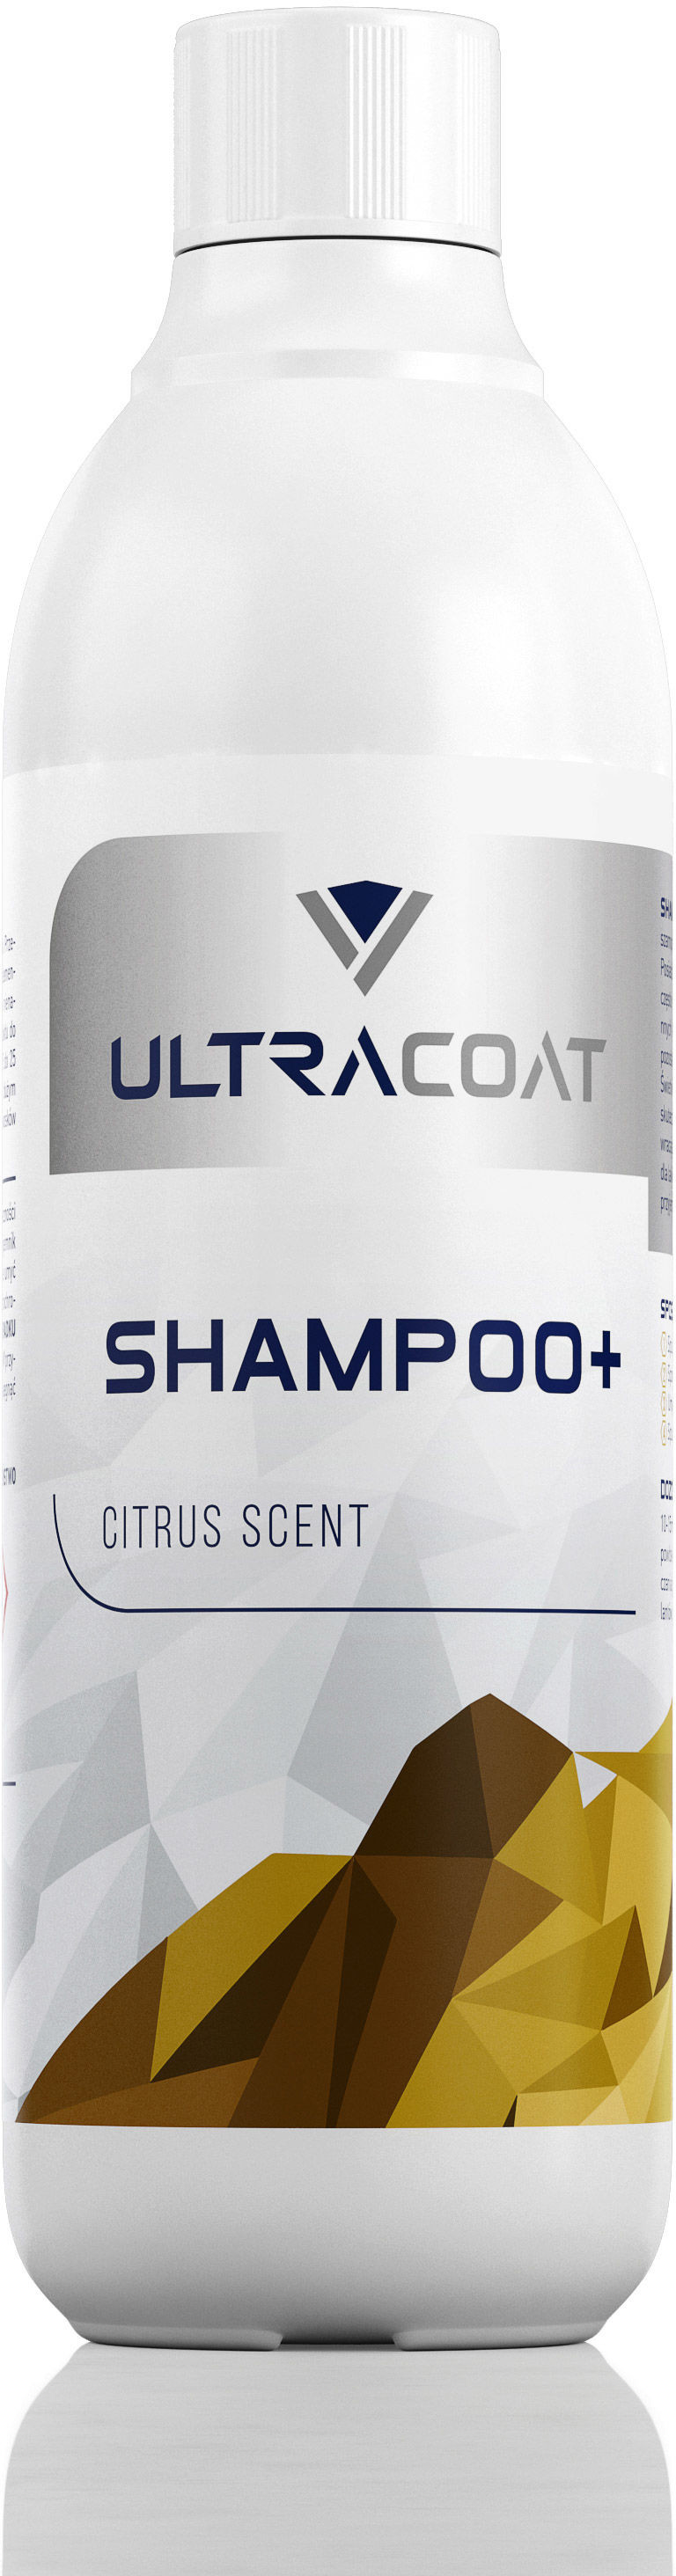 Ultracoat Ultracoat Shampoo+ - wysoce skoncentrowany szampon, odtłuszcza lakier 500ml ULT000009